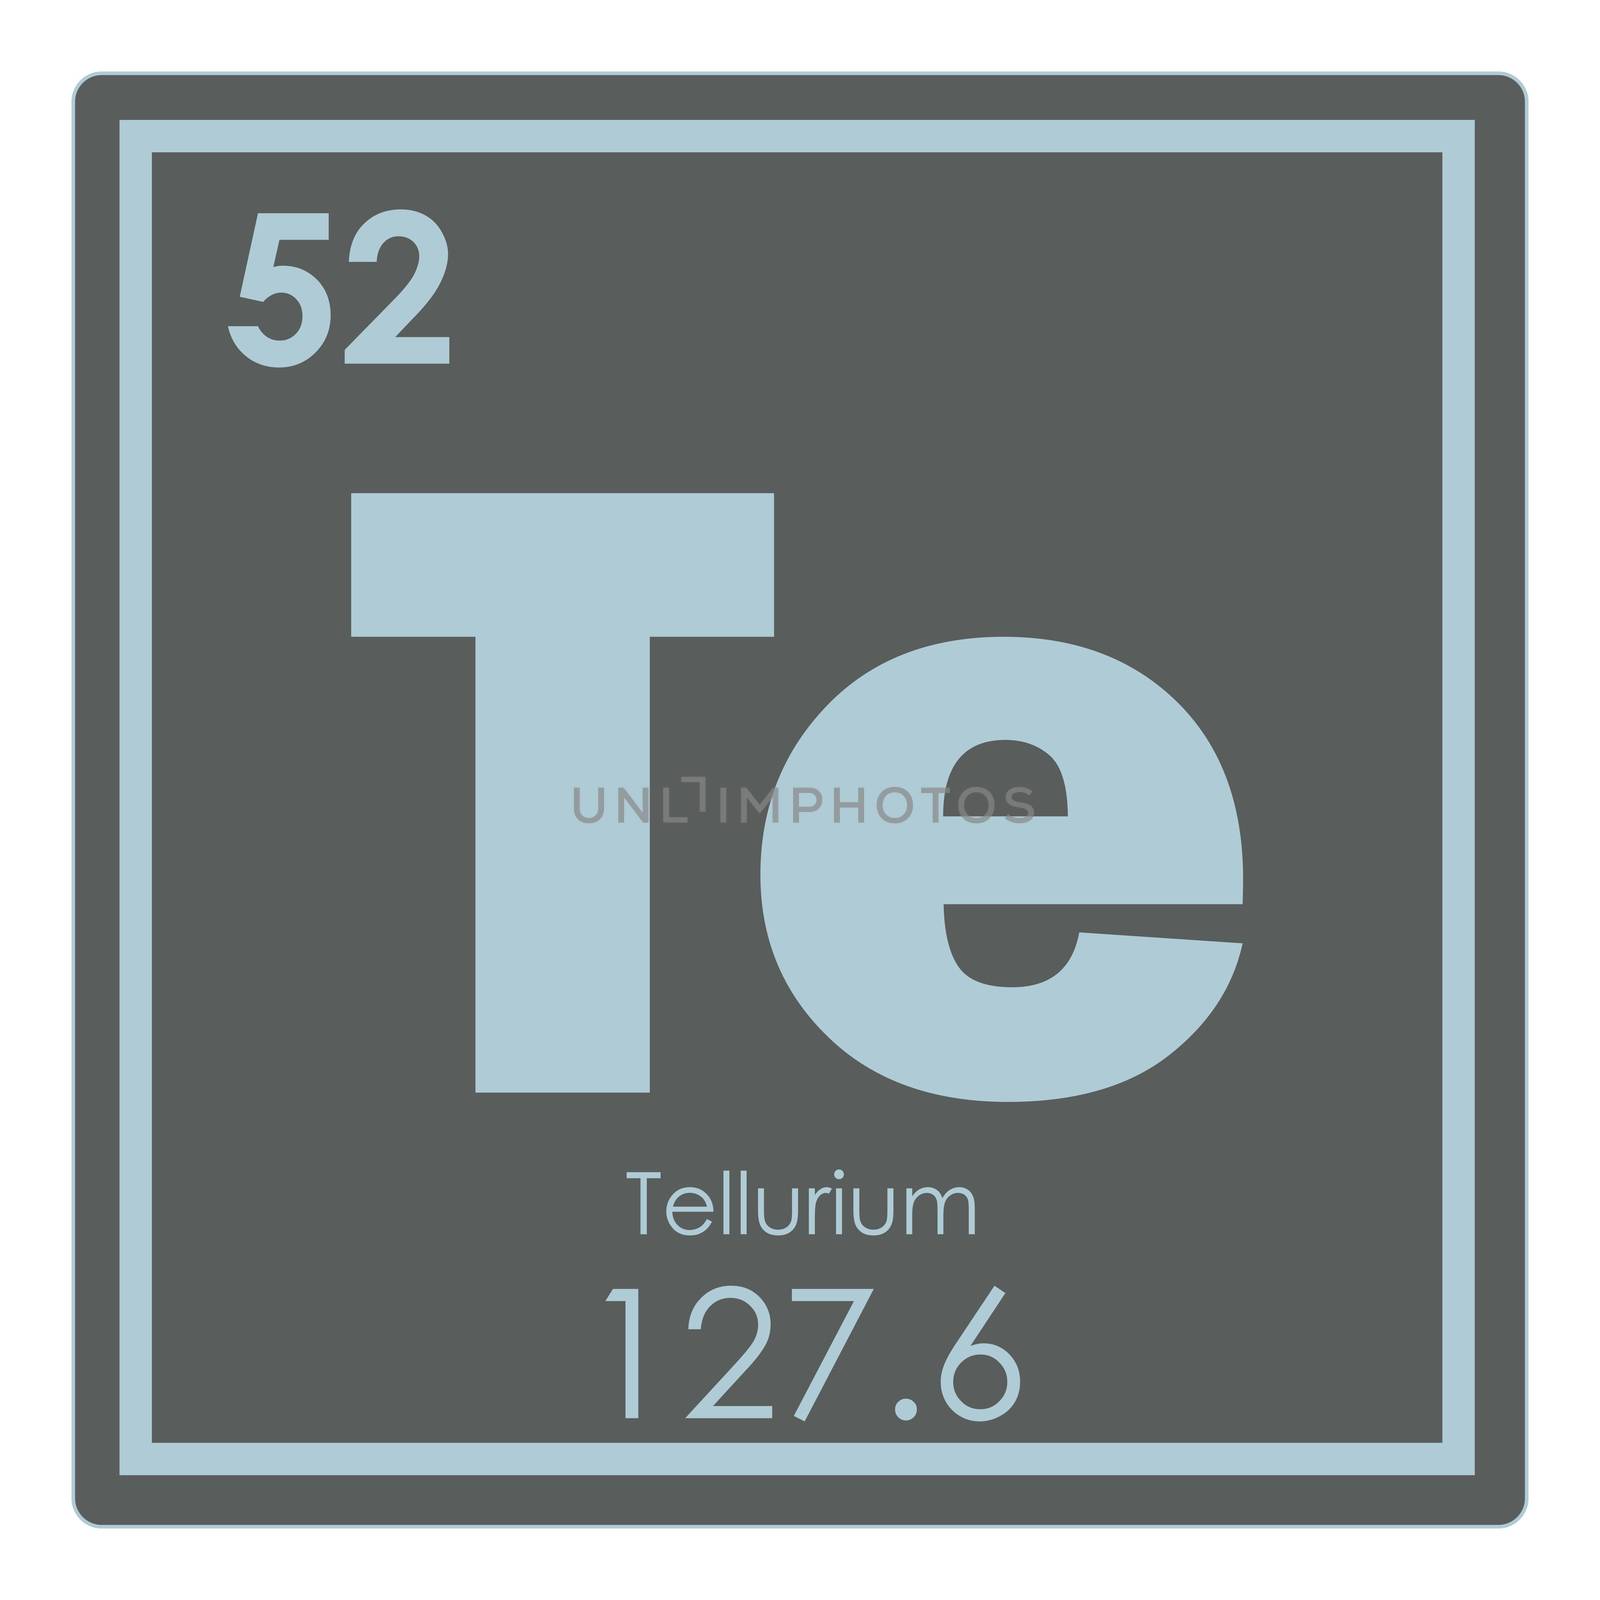 Tellurium chemical element by tony4urban